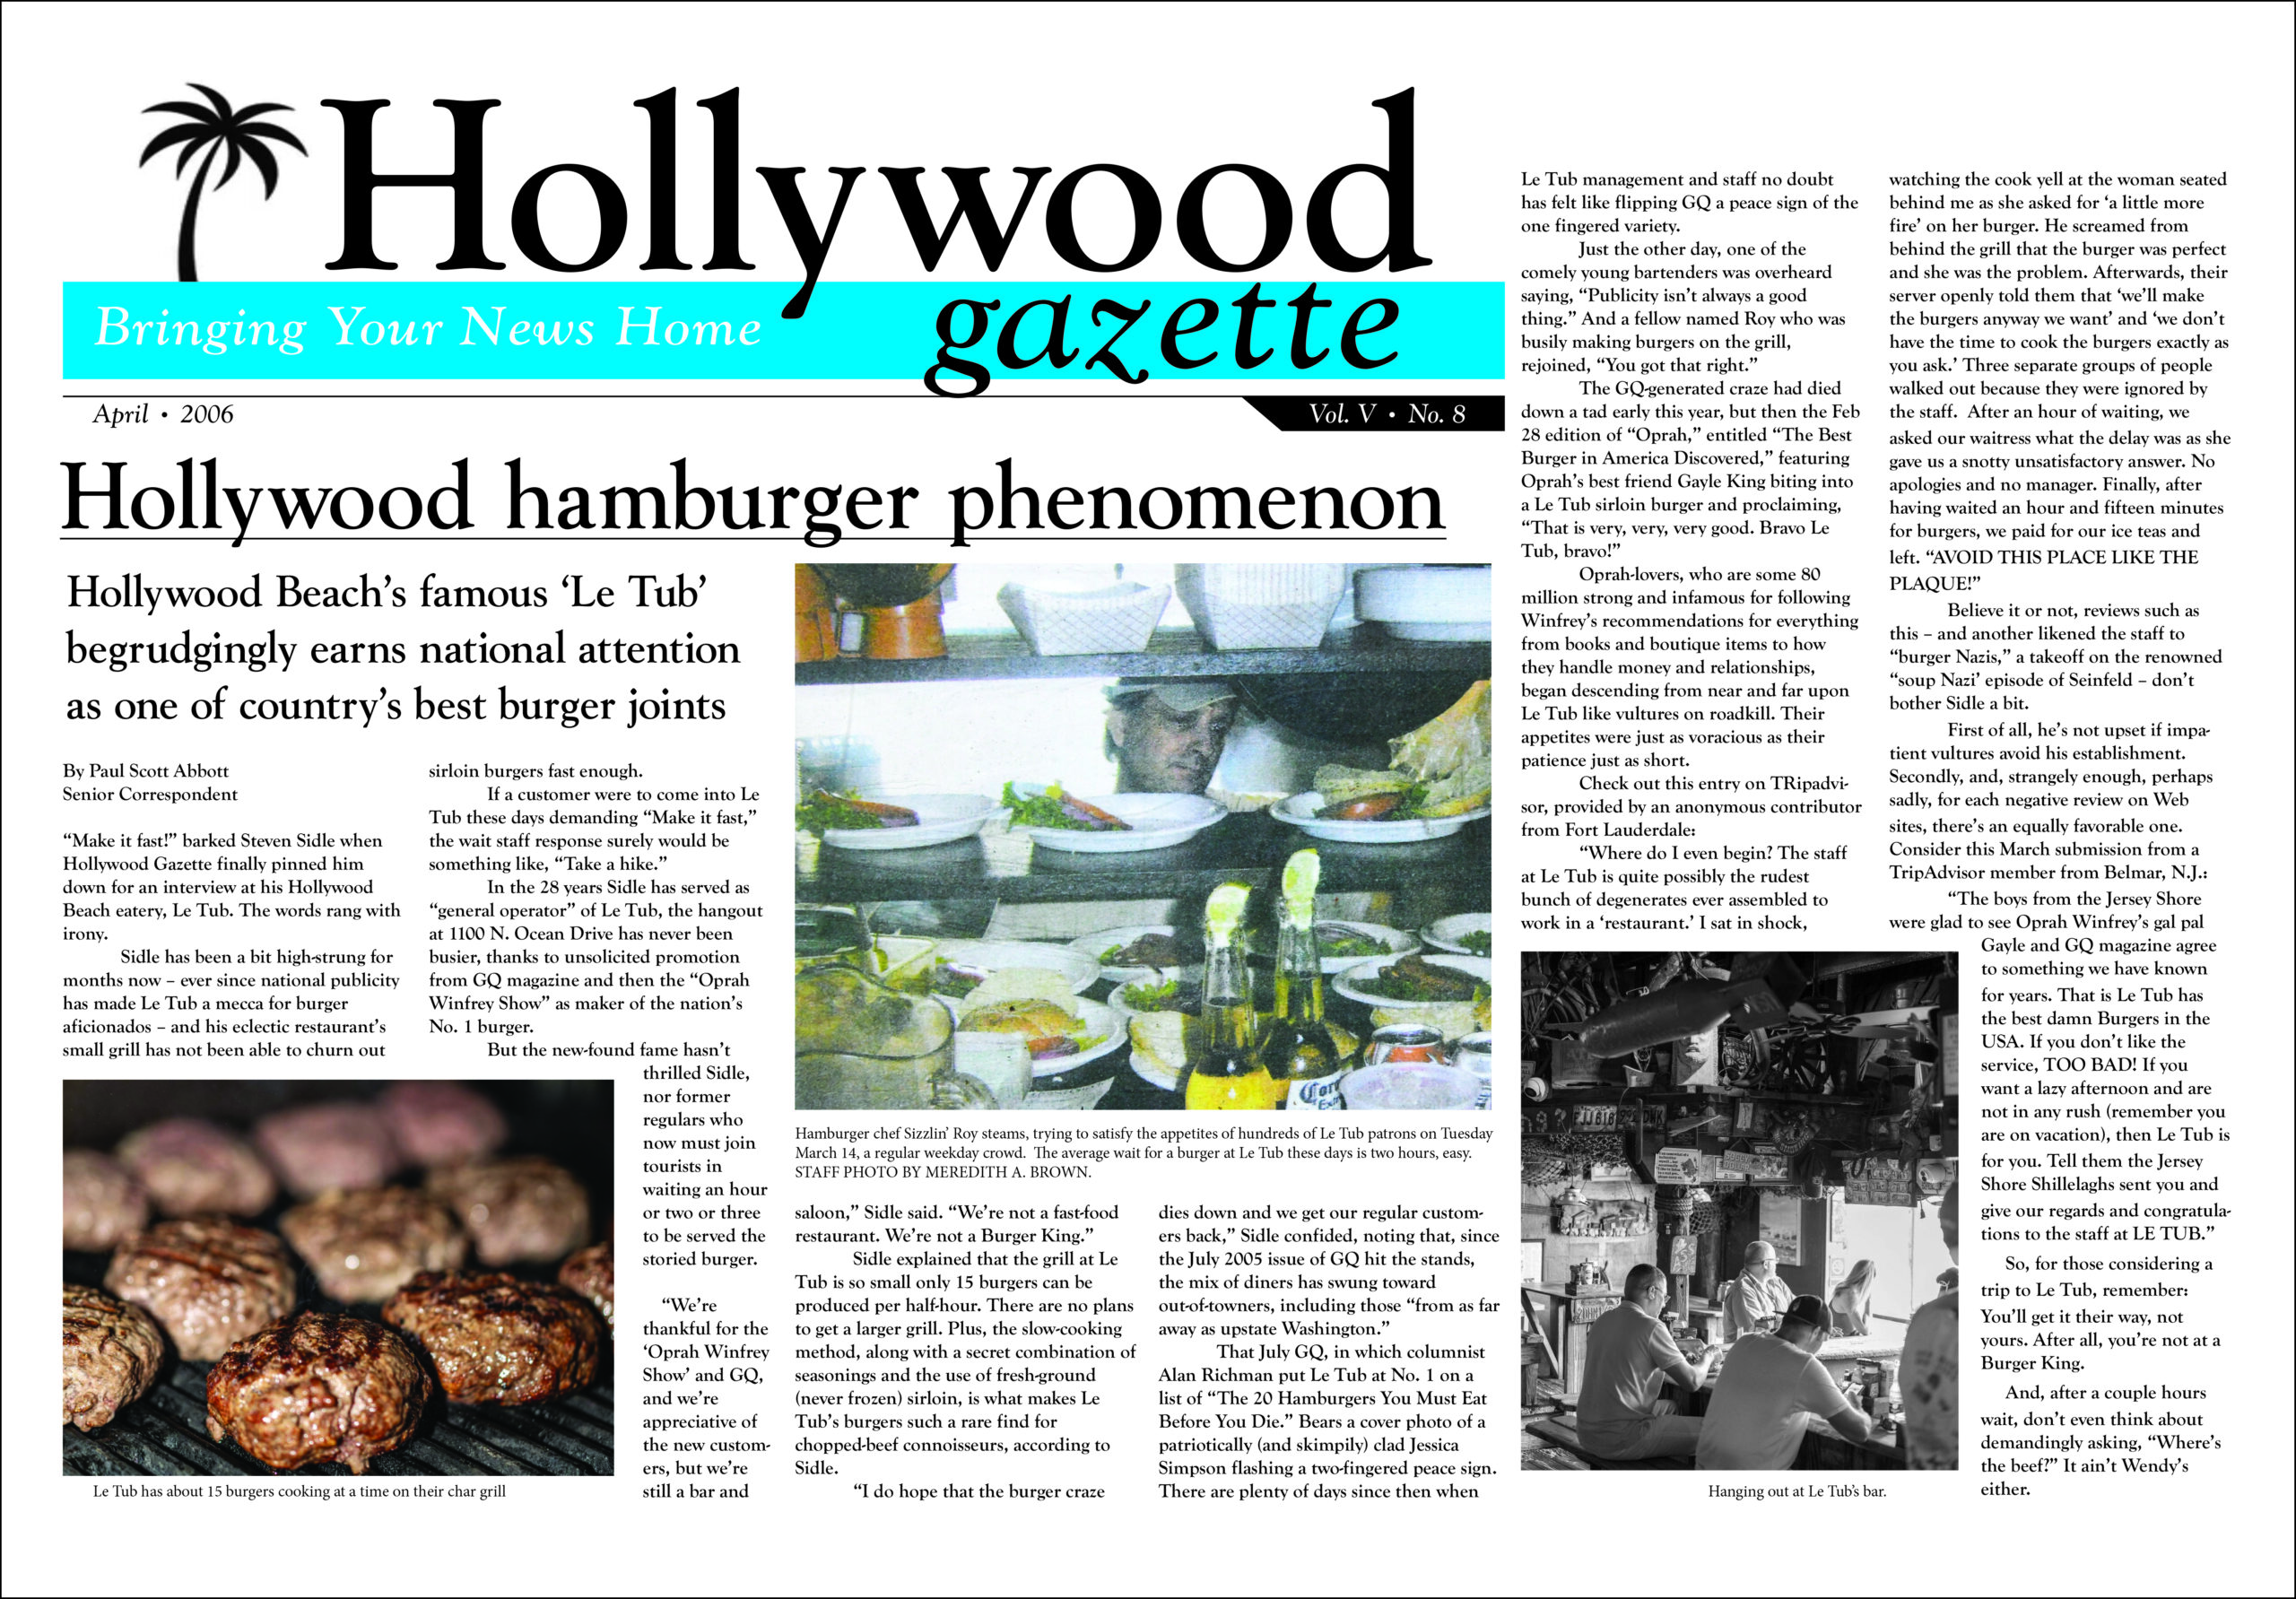 Hollywood hamburger phenomenon, Hollywood Gazette April 2006